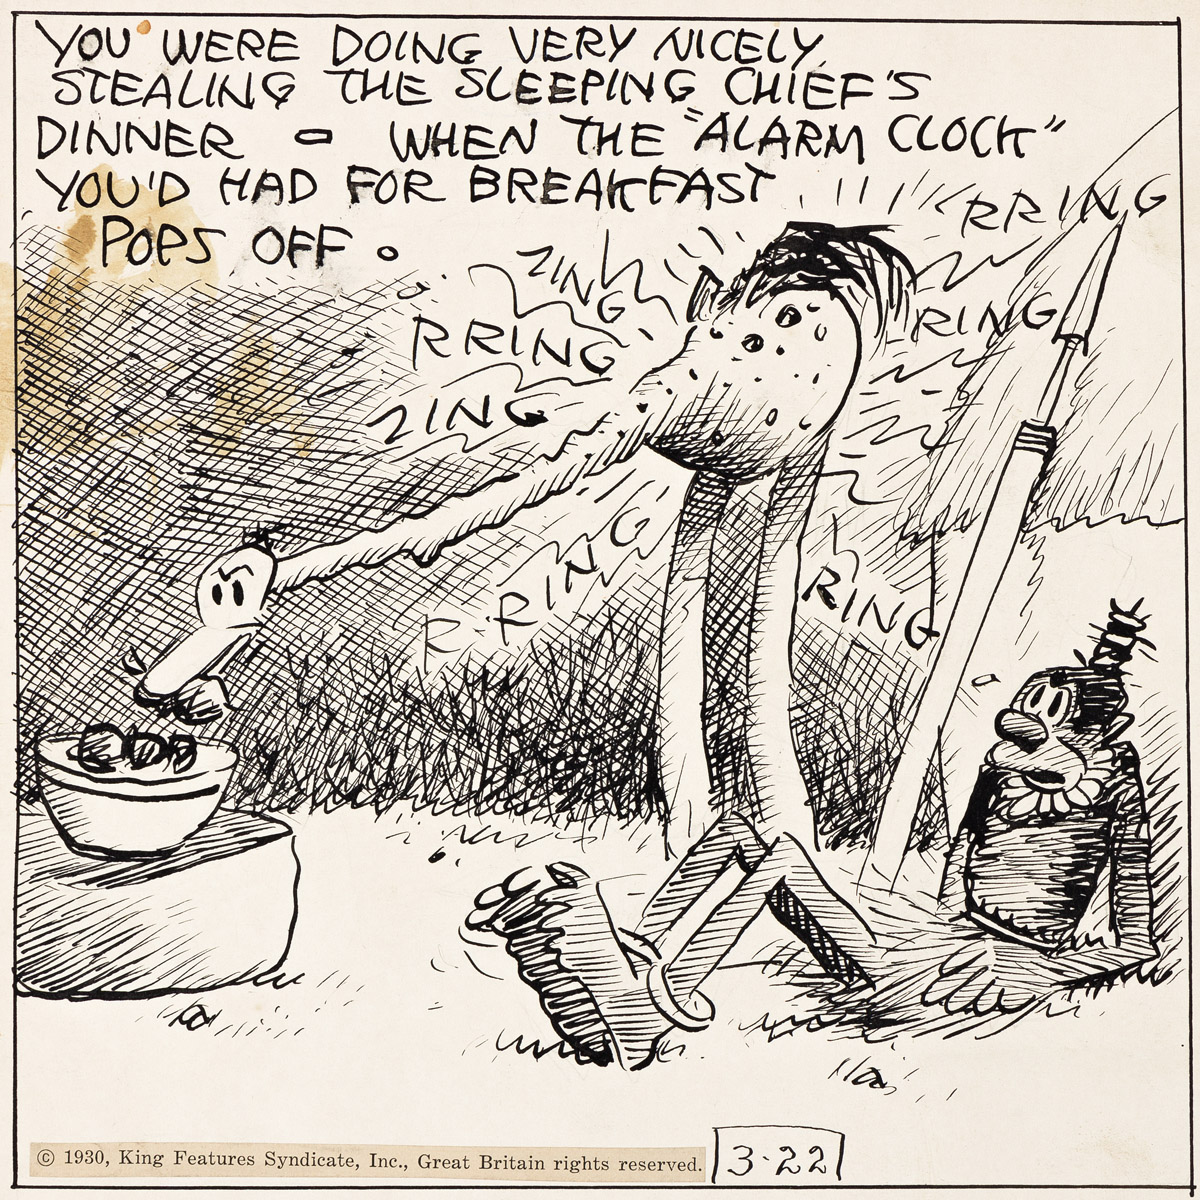 GEORGE HERRIMAN (1880-1944) Two Embarrassing Moments / Bernie Burns comic strips.